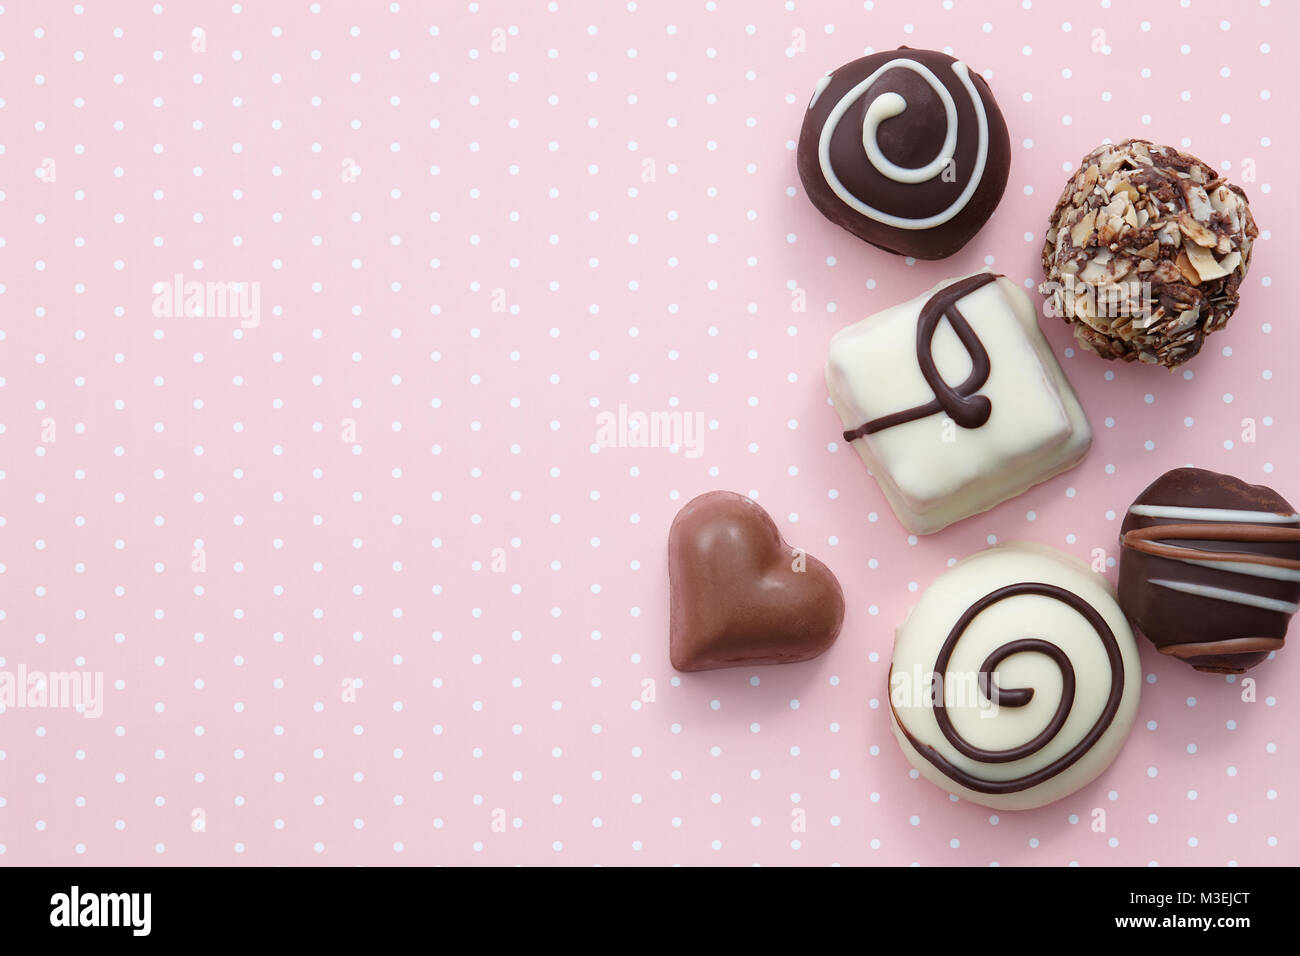 Handmade chocolate candy sweets Stock Photo